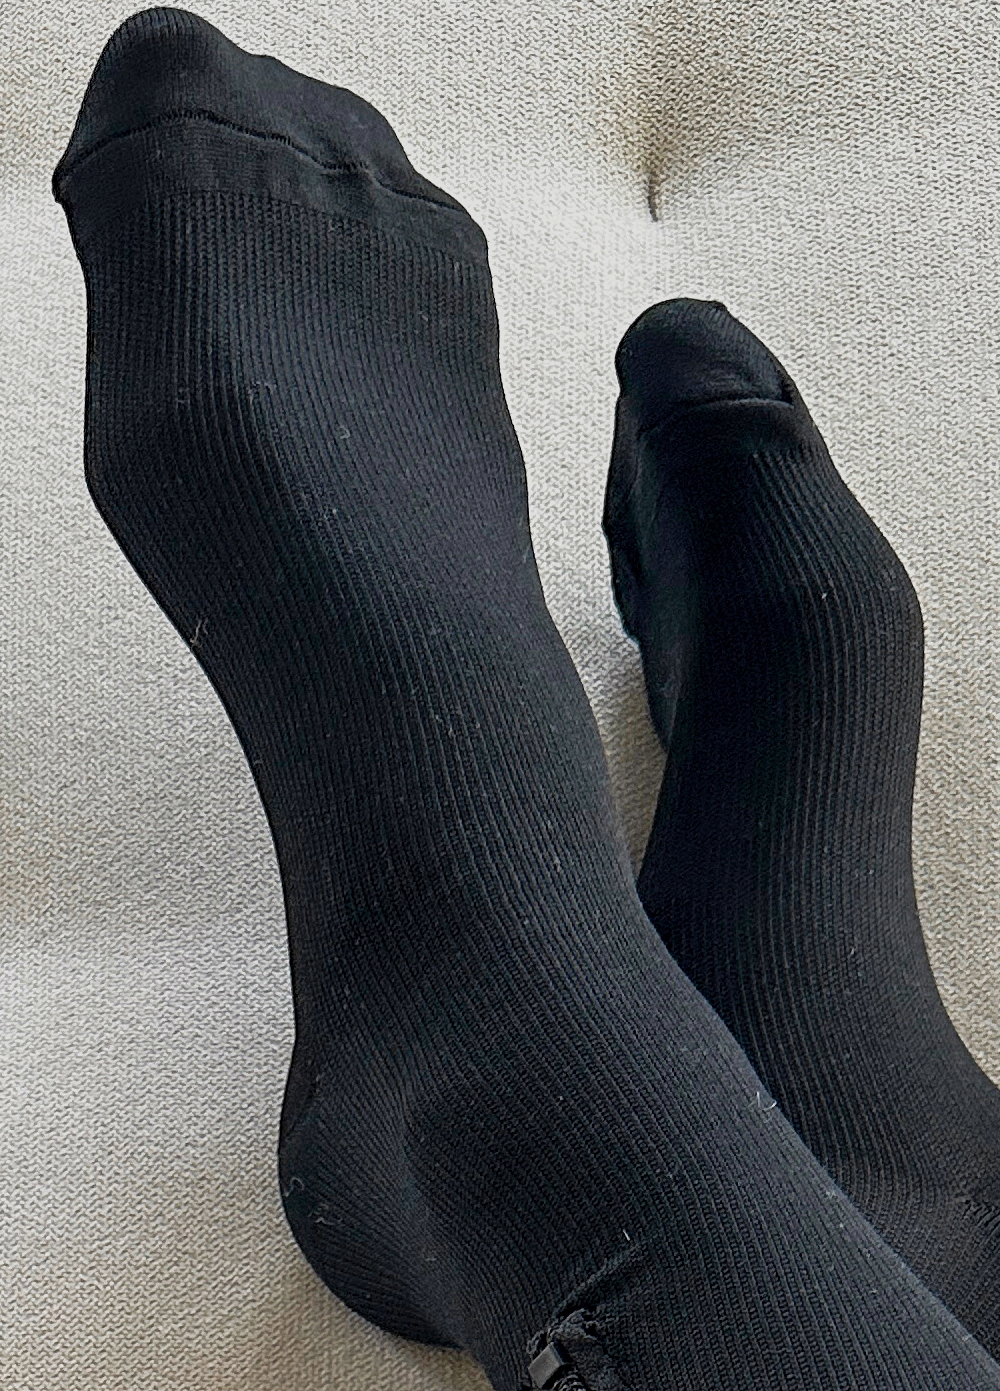 Mama Sox - Calm Zippered Maternity Compression Socks in Black